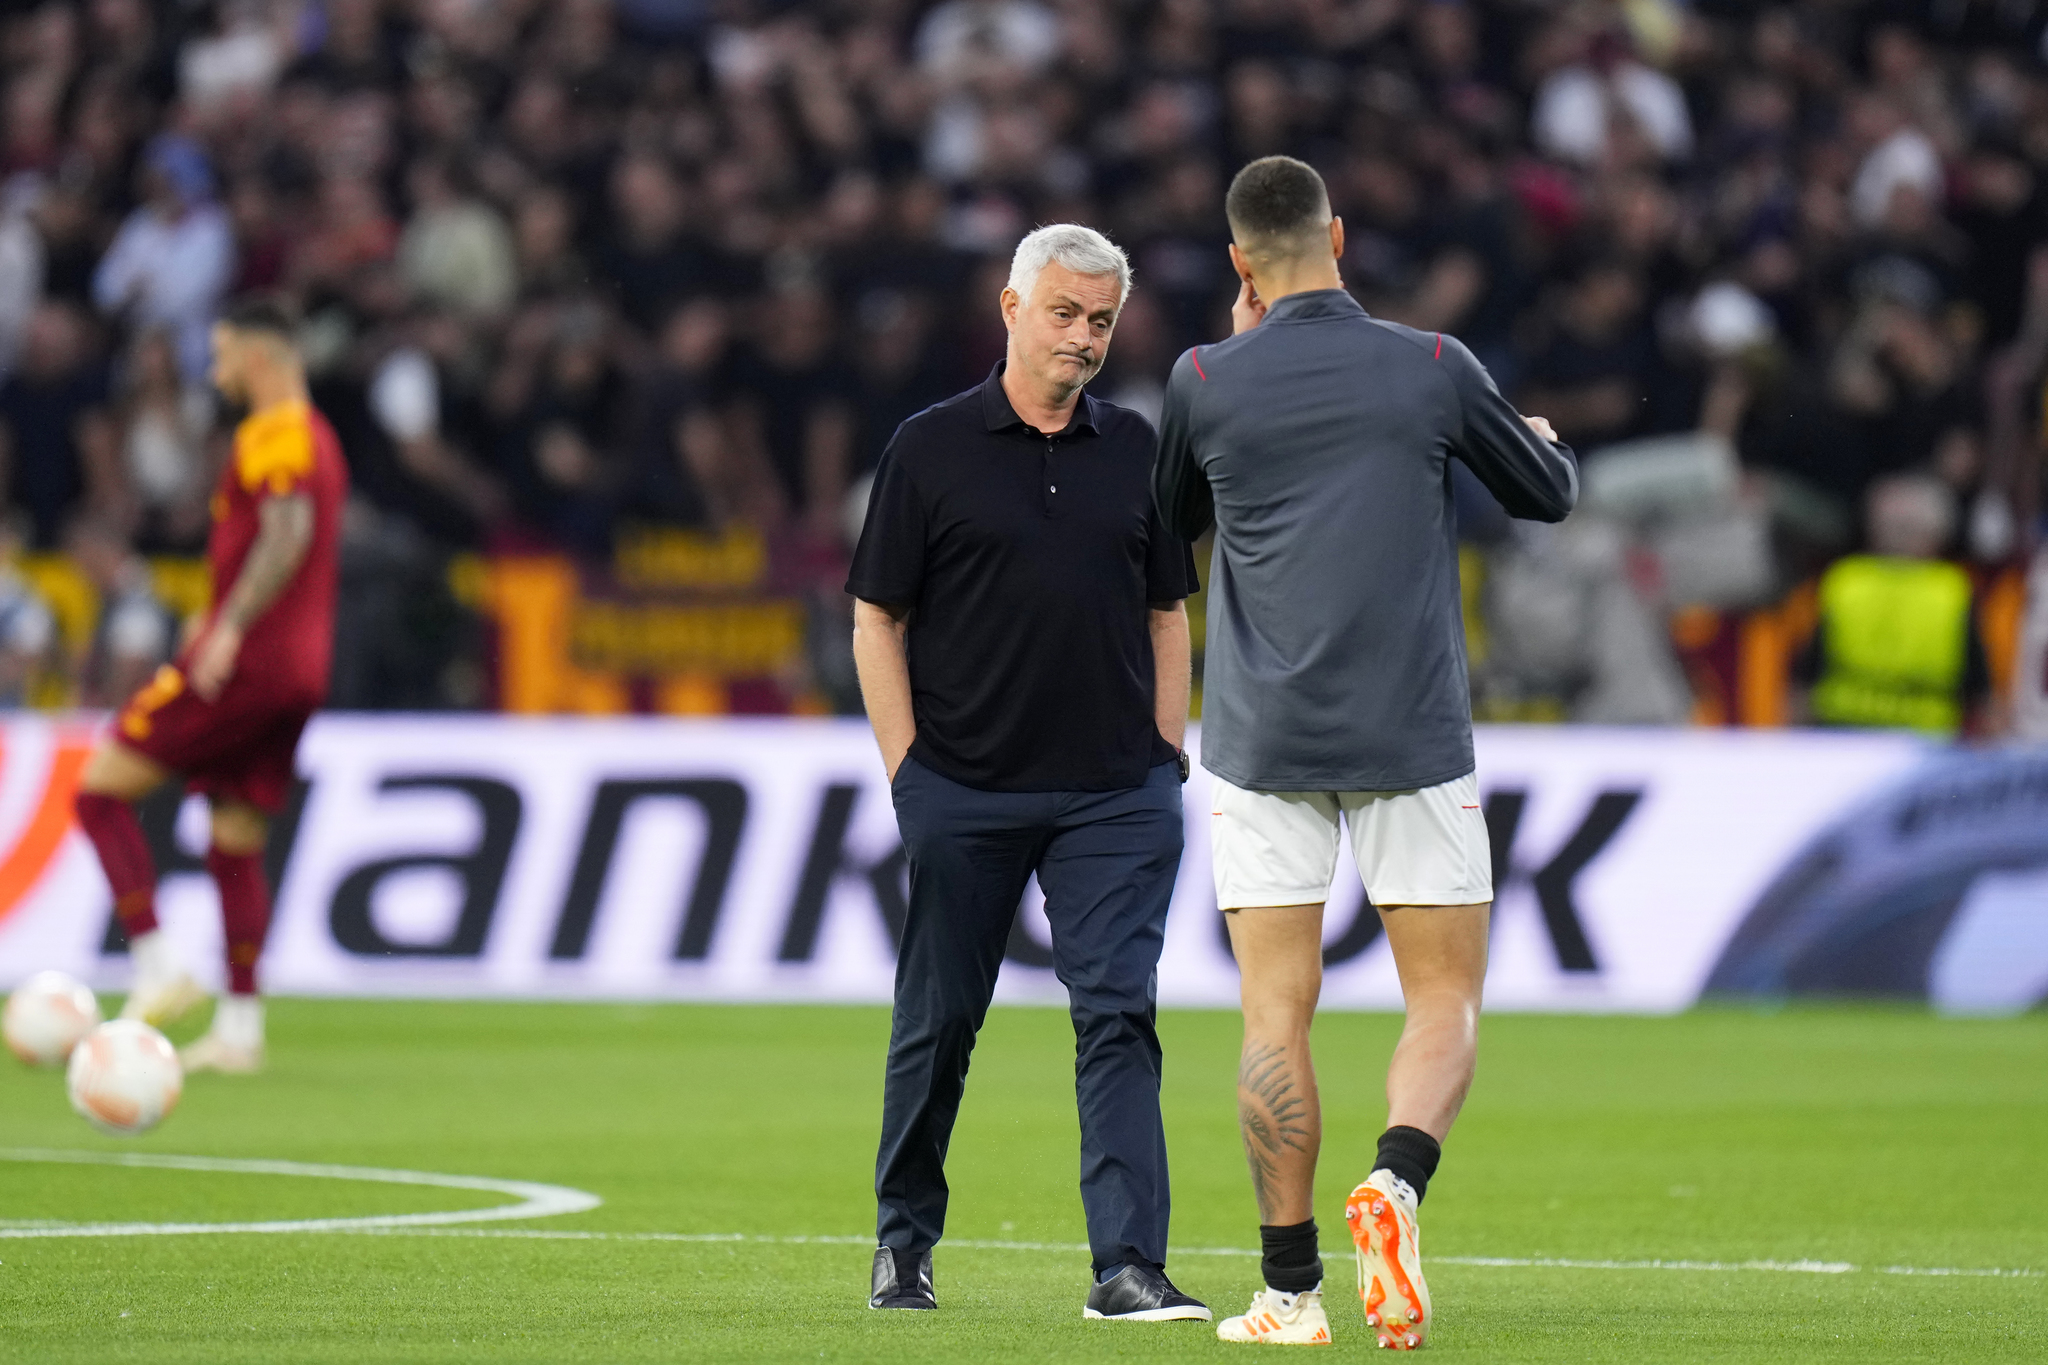 Roma head coach Jose Mourinho walks towards Sevilla's Erik Lamela, right, during warmup before the Europa League final 